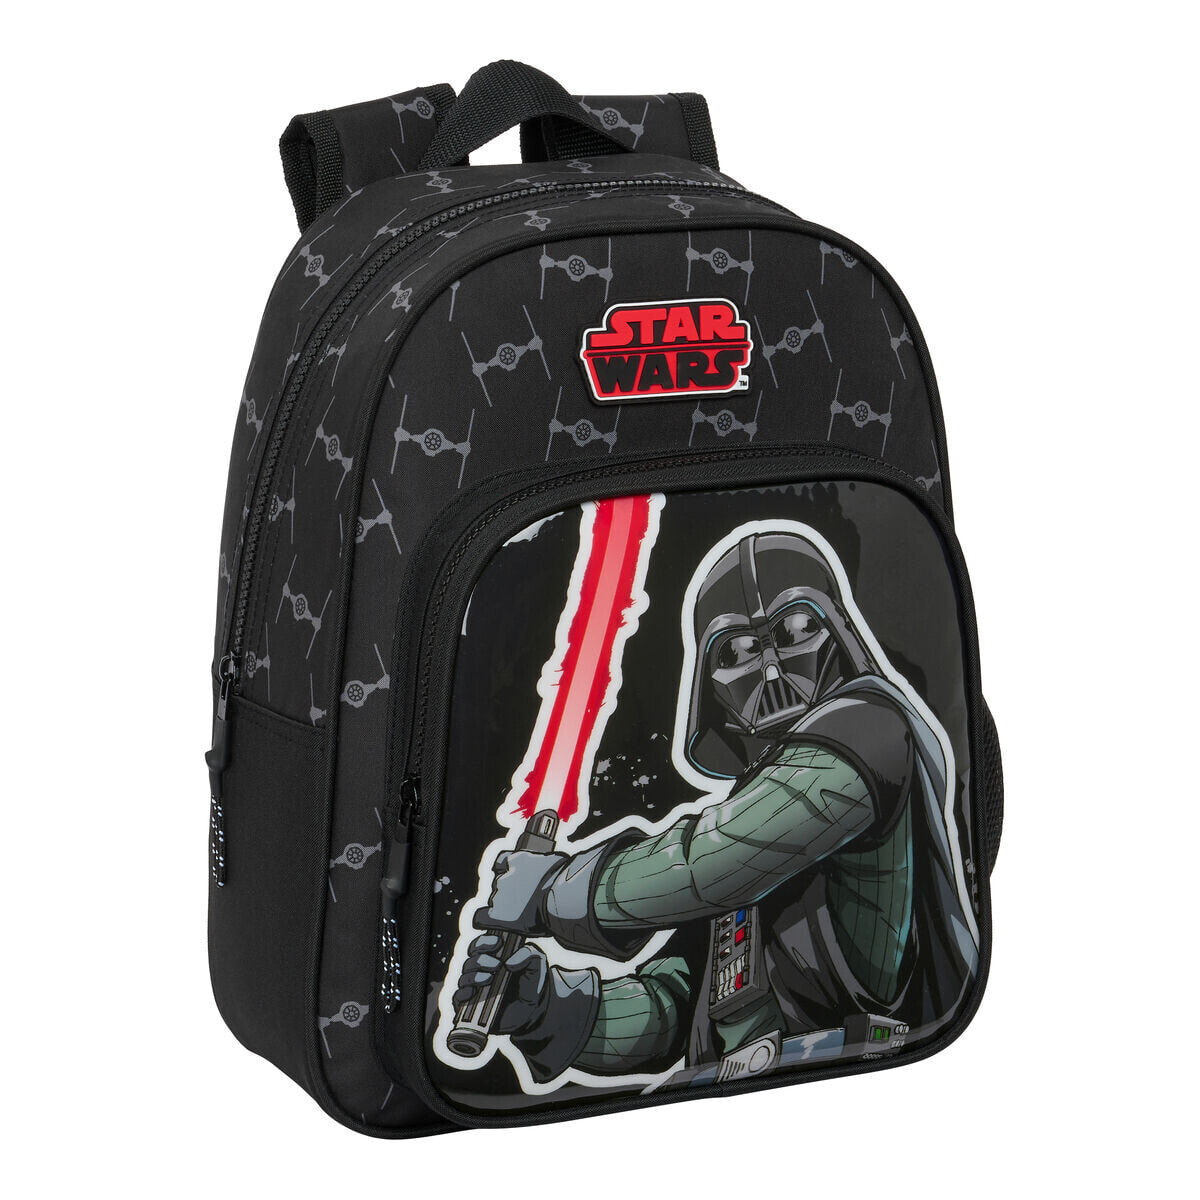 School Bag Star Wars The fighter Black 27 x 33 x 10 cm